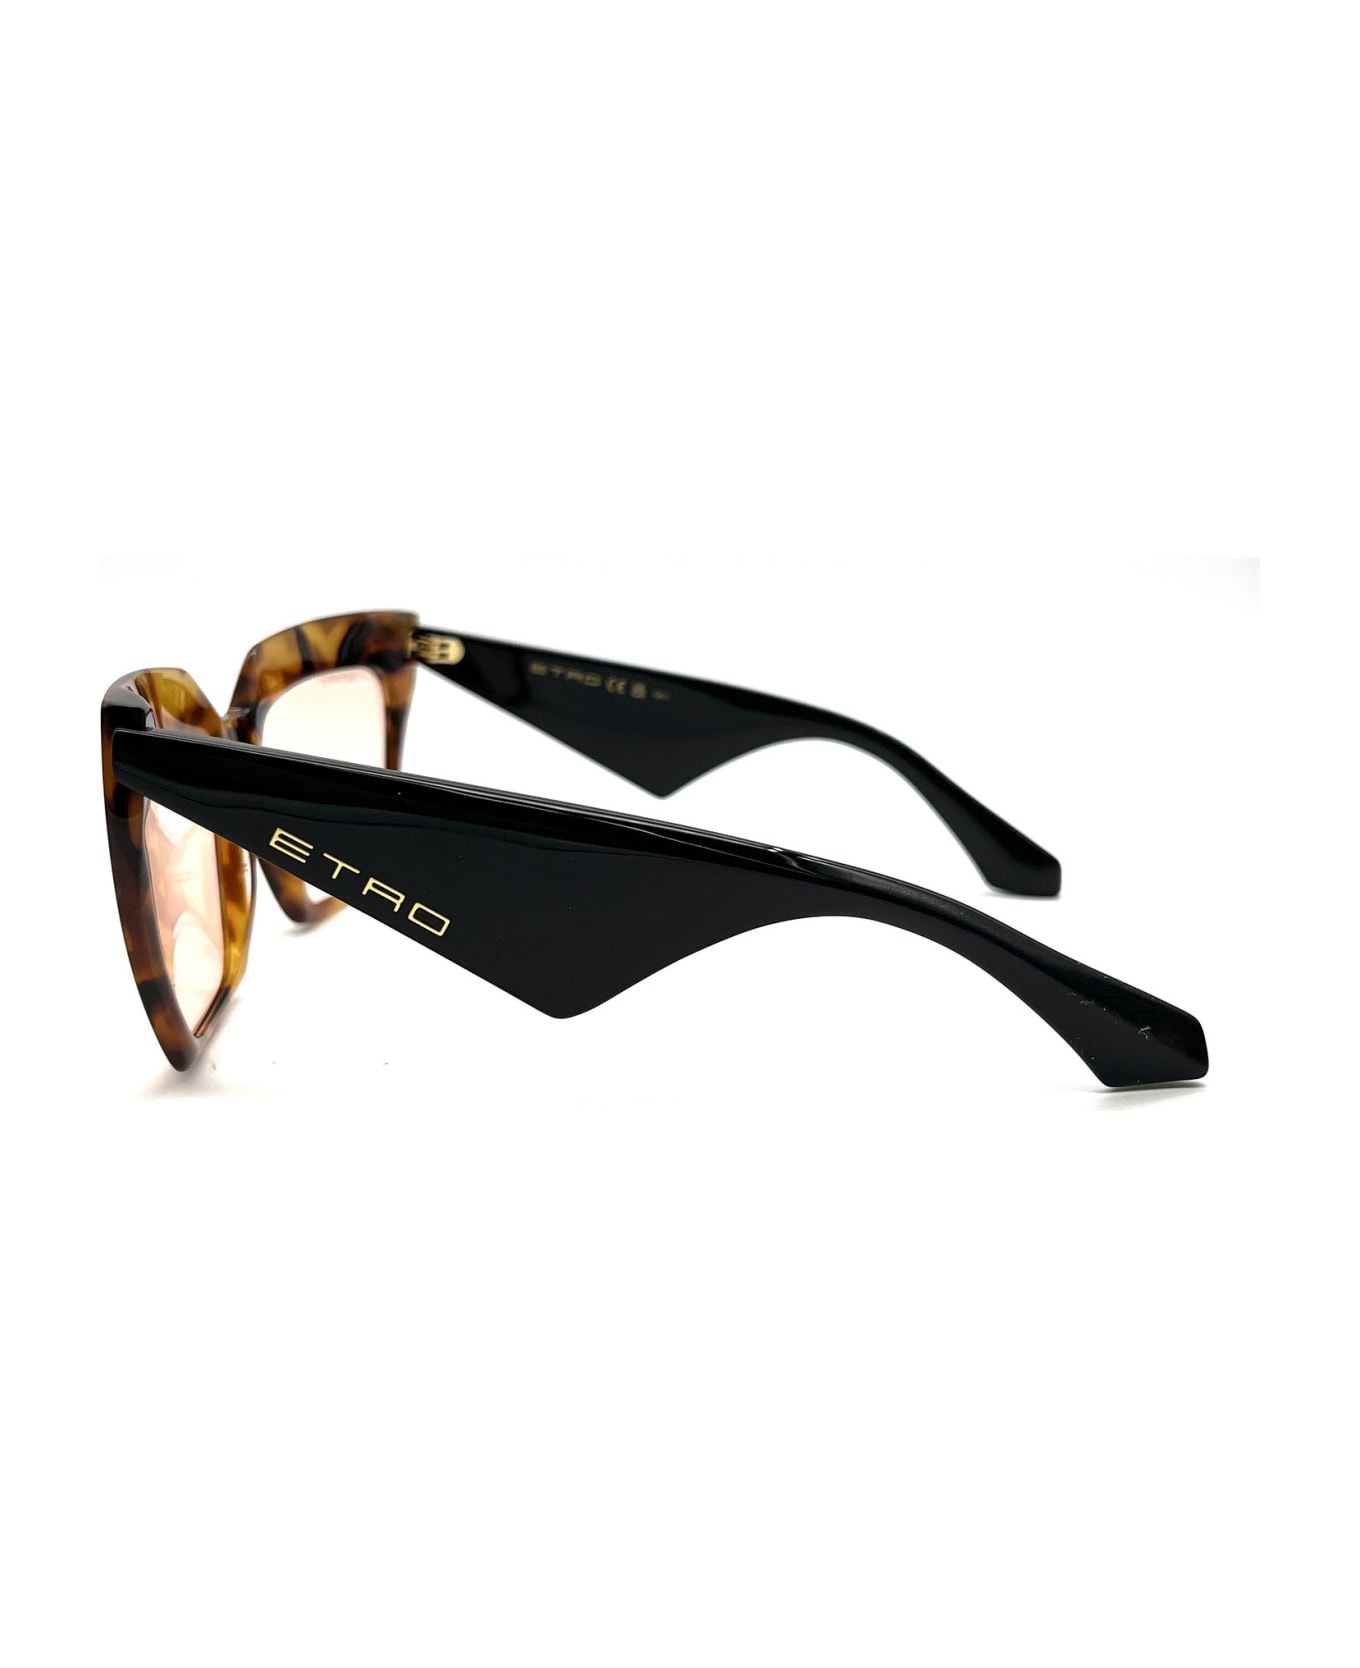 Etro 0001/S Sunglasses - Havana Honey